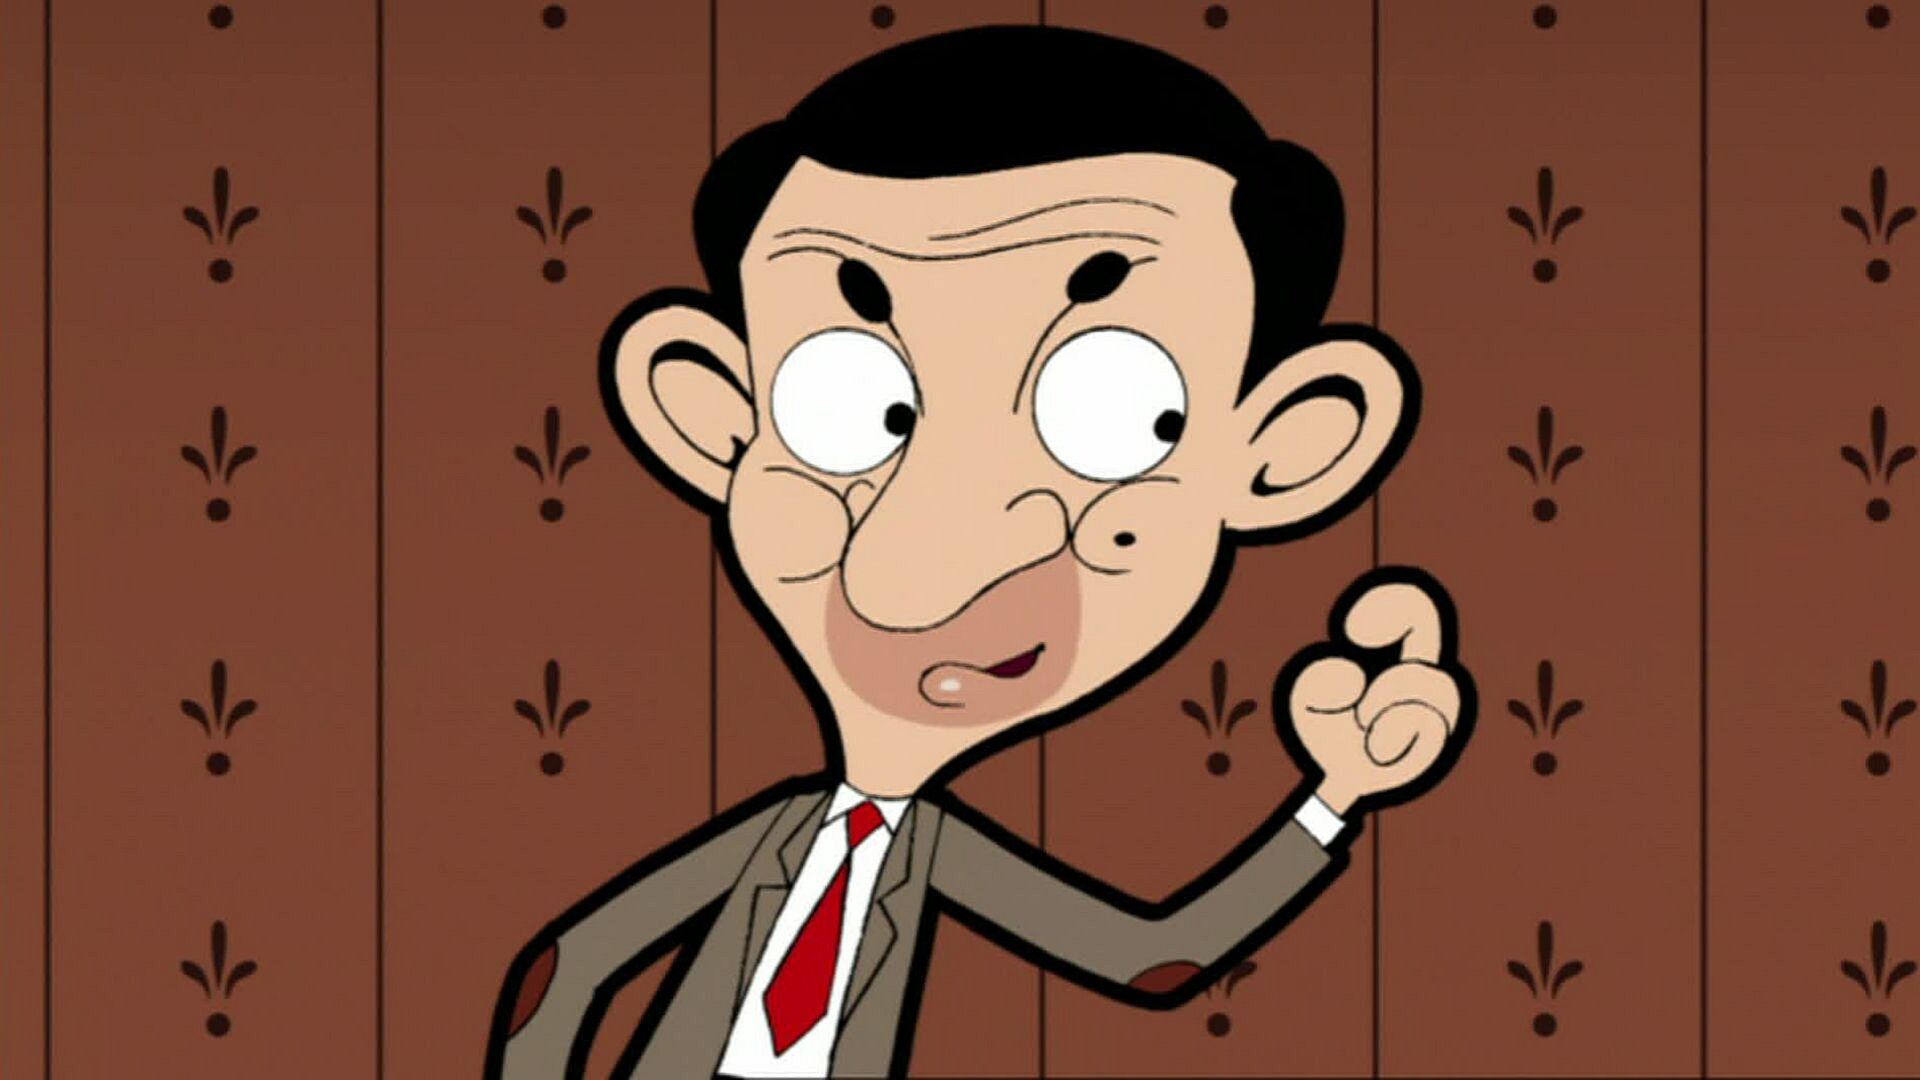 Mr. Bean Animated